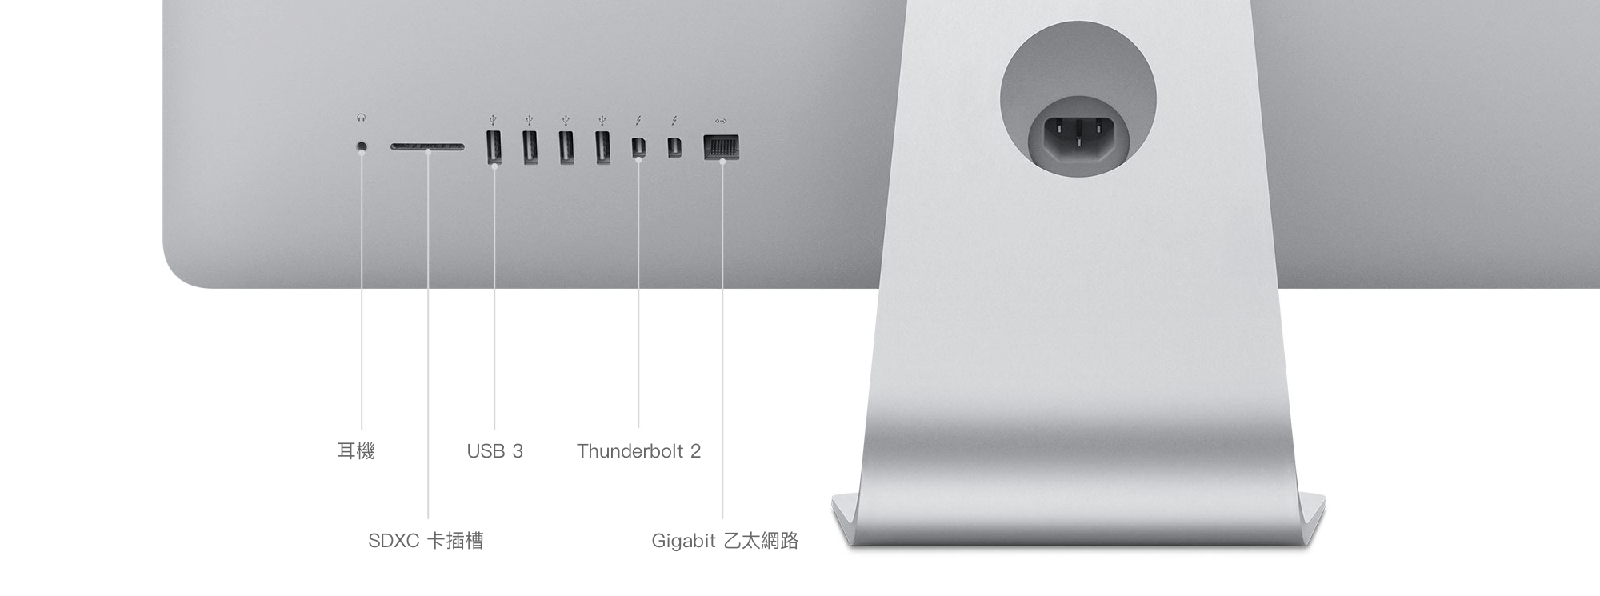 iMac (Retina 5K，27 英吋，2015 年末) - 技術規格(香港)